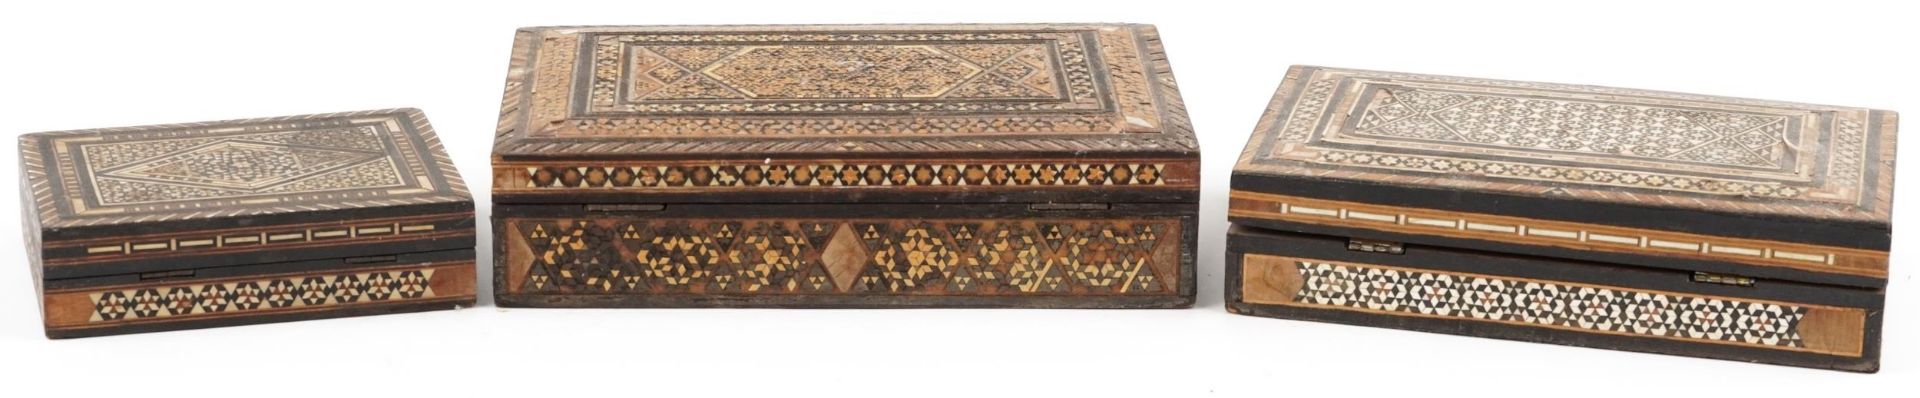 Three Syrian Moorish style rectangular inlaid wooden boxes, the largest 22cm wide - Bild 3 aus 4